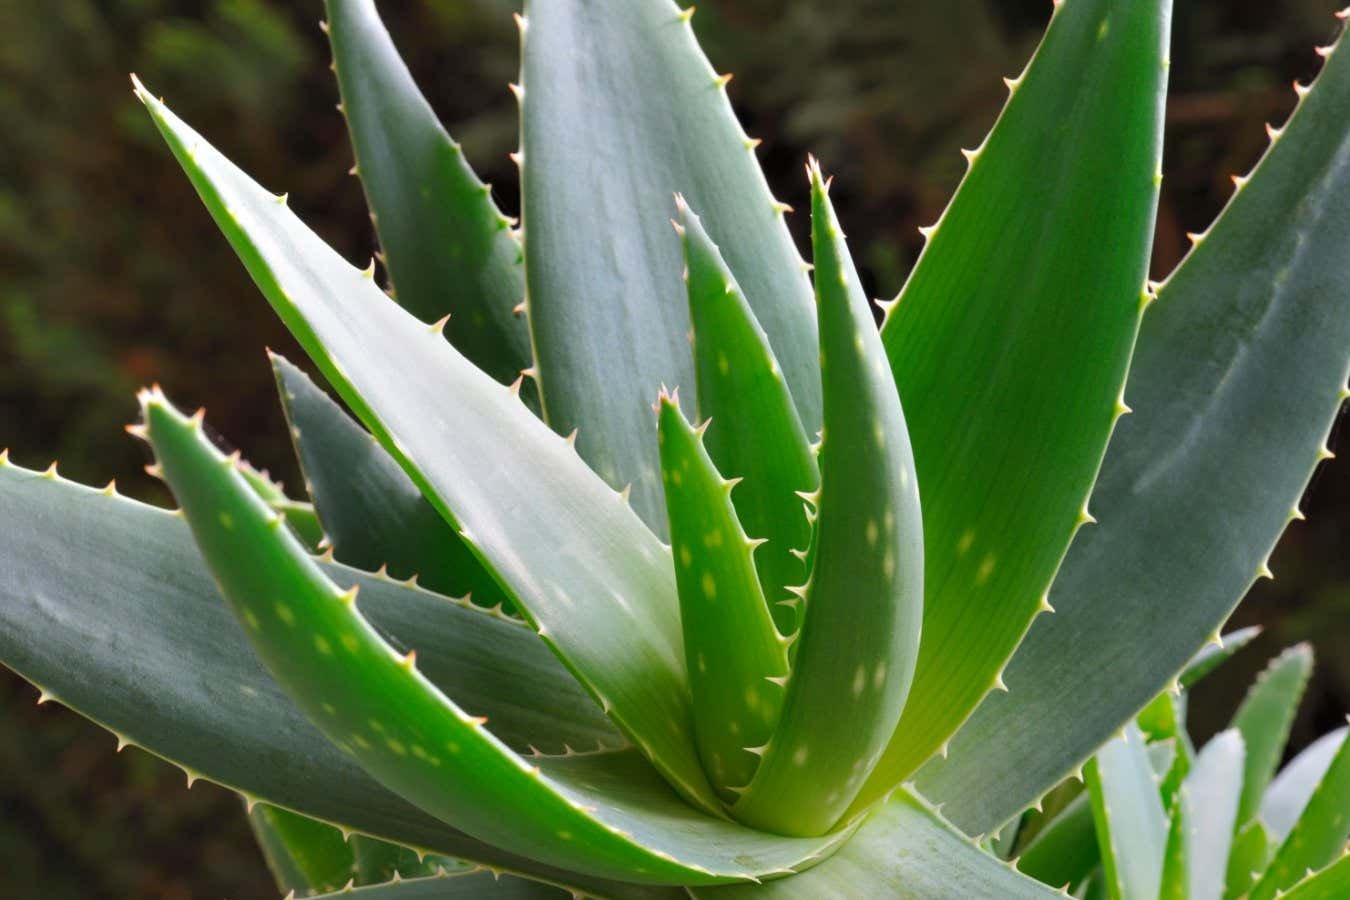 Aloe vera vegetation was energy-storing supercapacitors